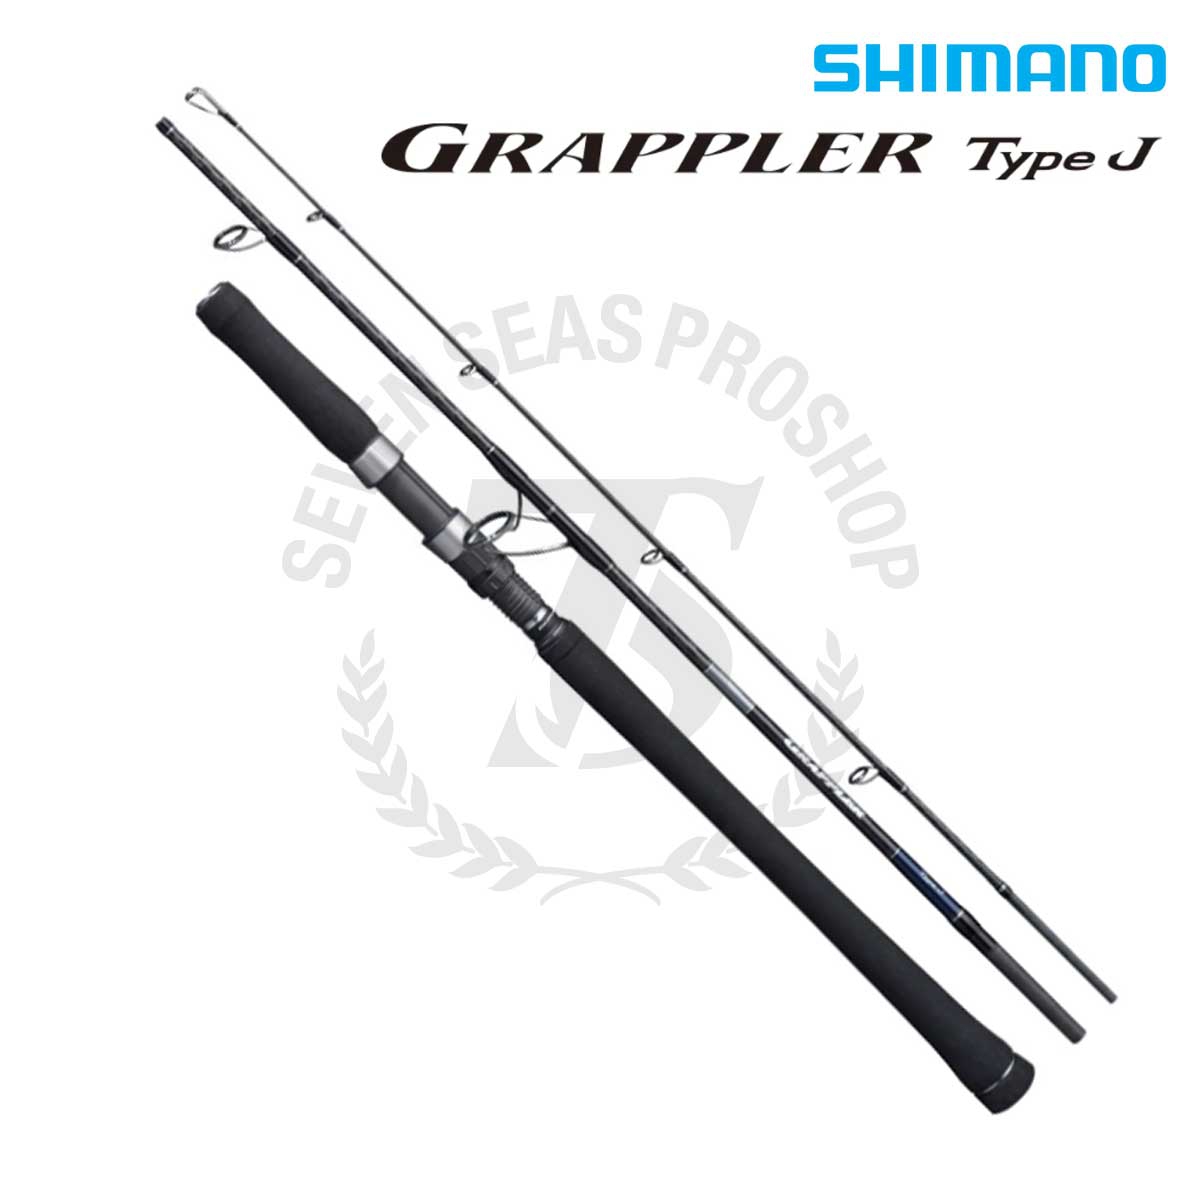 Shimano Grappler Type-J 3 Piece #S60-4/3 (Spinning) - 7 SEAS